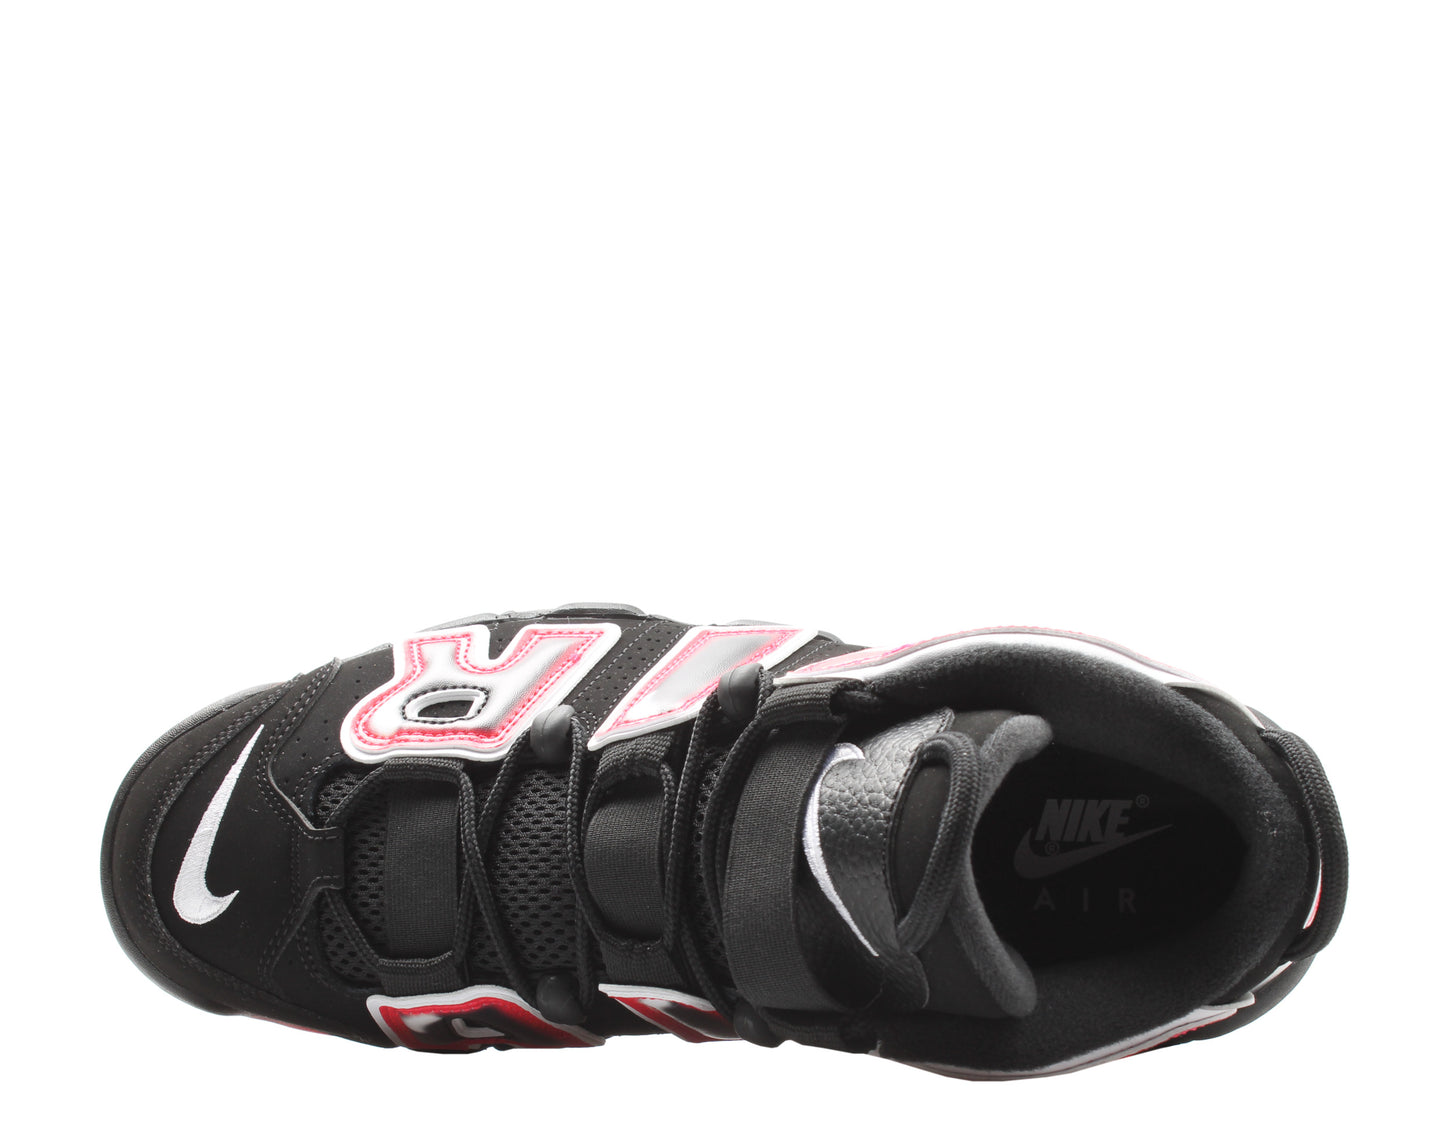 Nike Air More Uptempo '96 Black/Laser Crimson Men's Basketball Shoes CJ6129-001